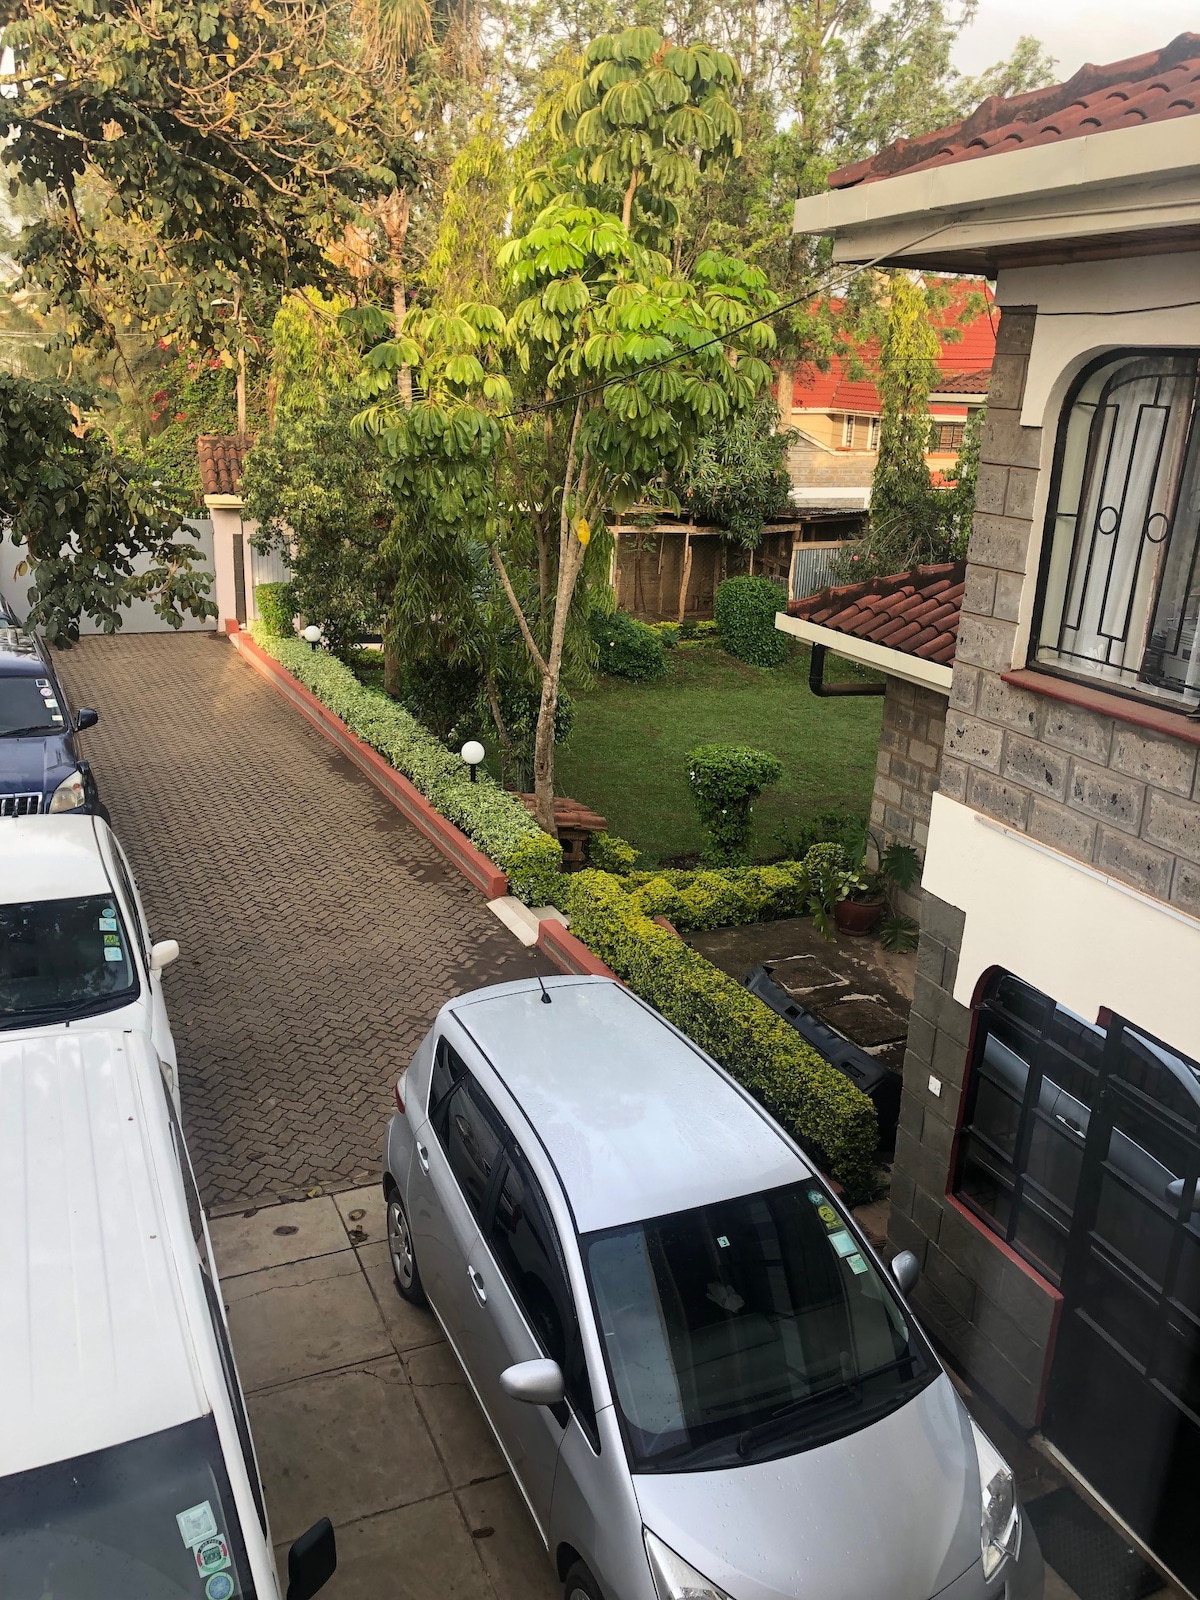 6-Bed Apartment Nairobi, in Sukari, Wi-Fi, Parking